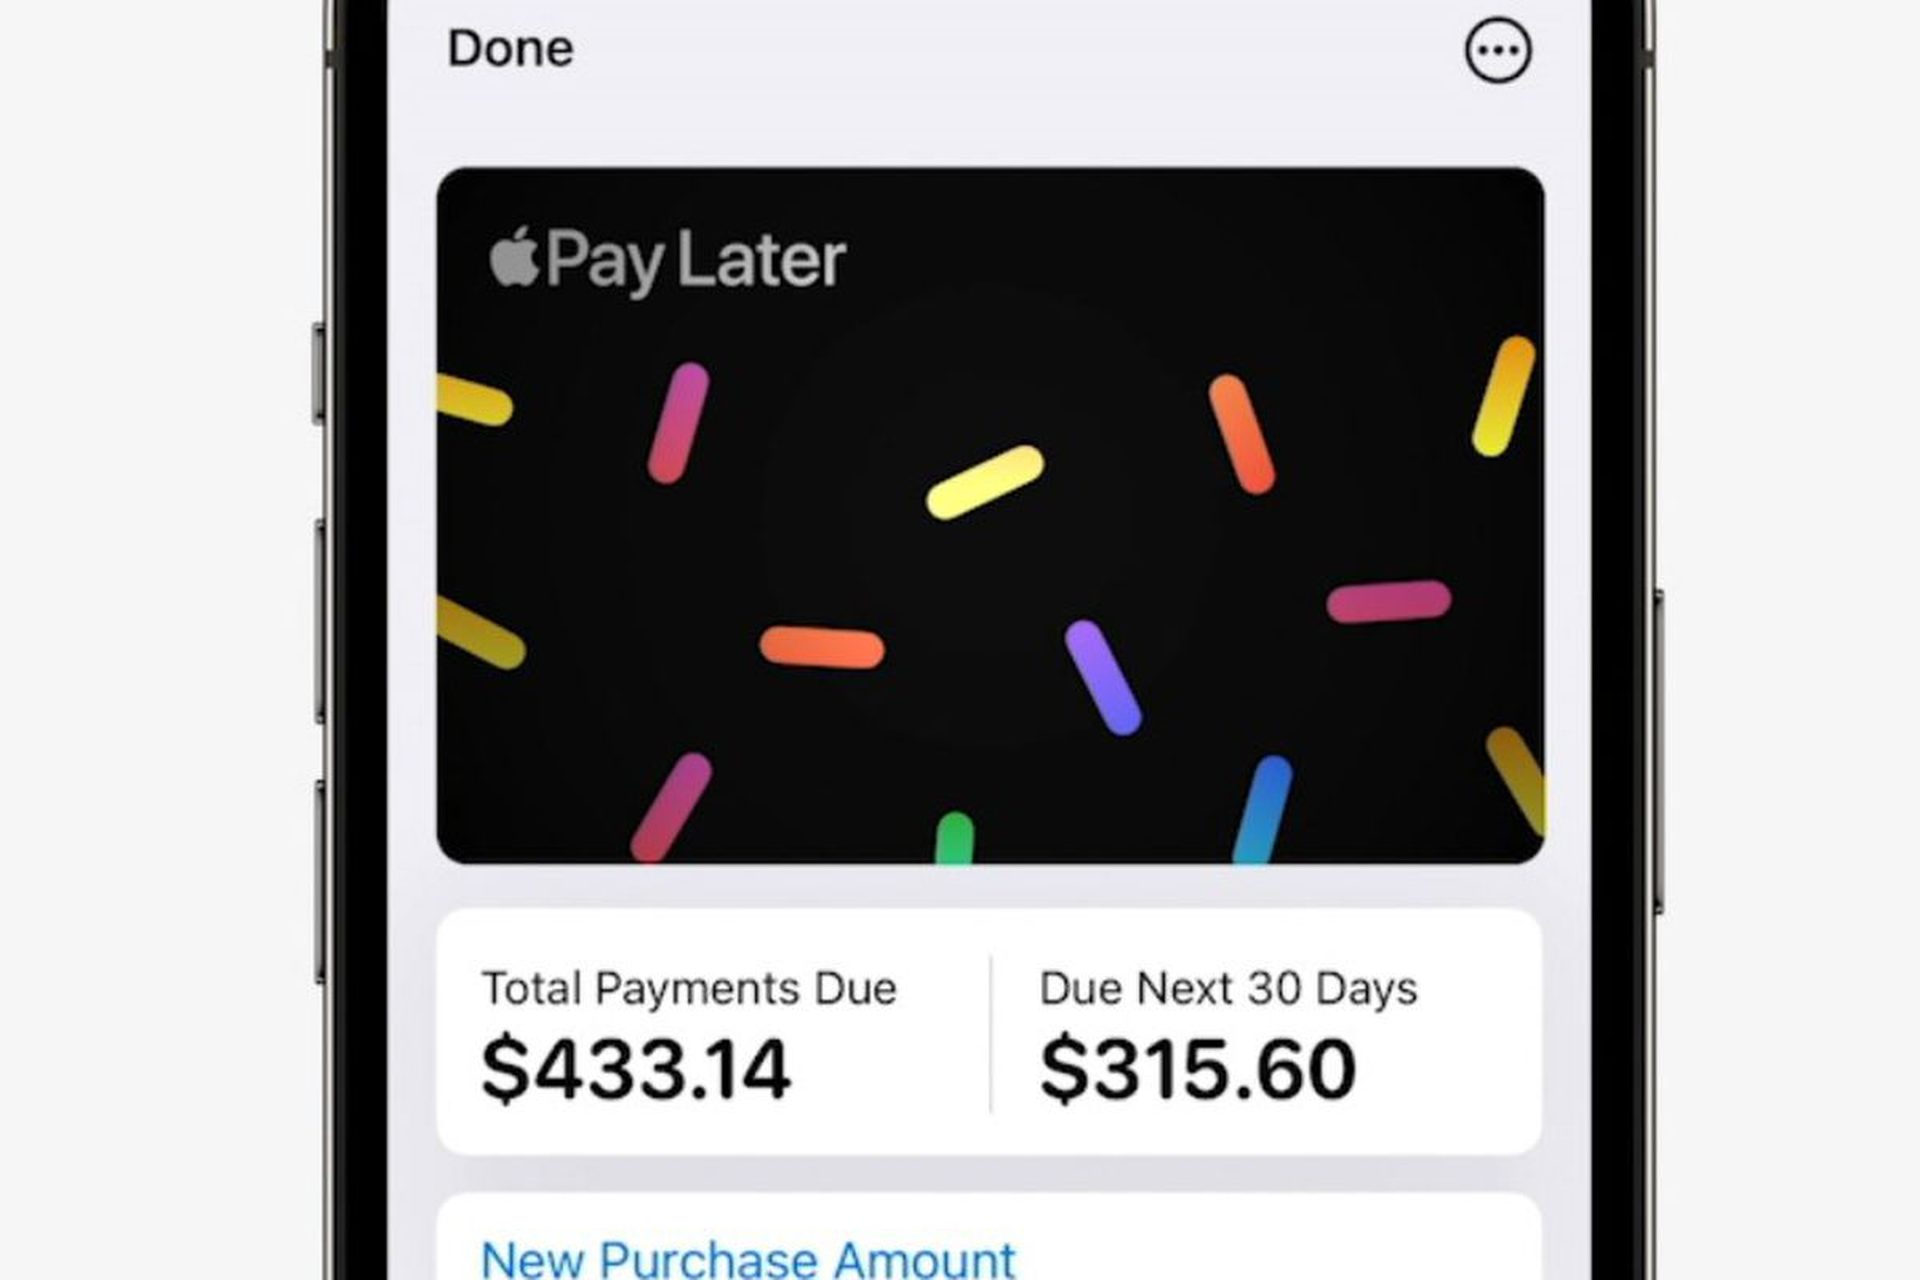 Compre agora, pague depois: Apple Pay Later